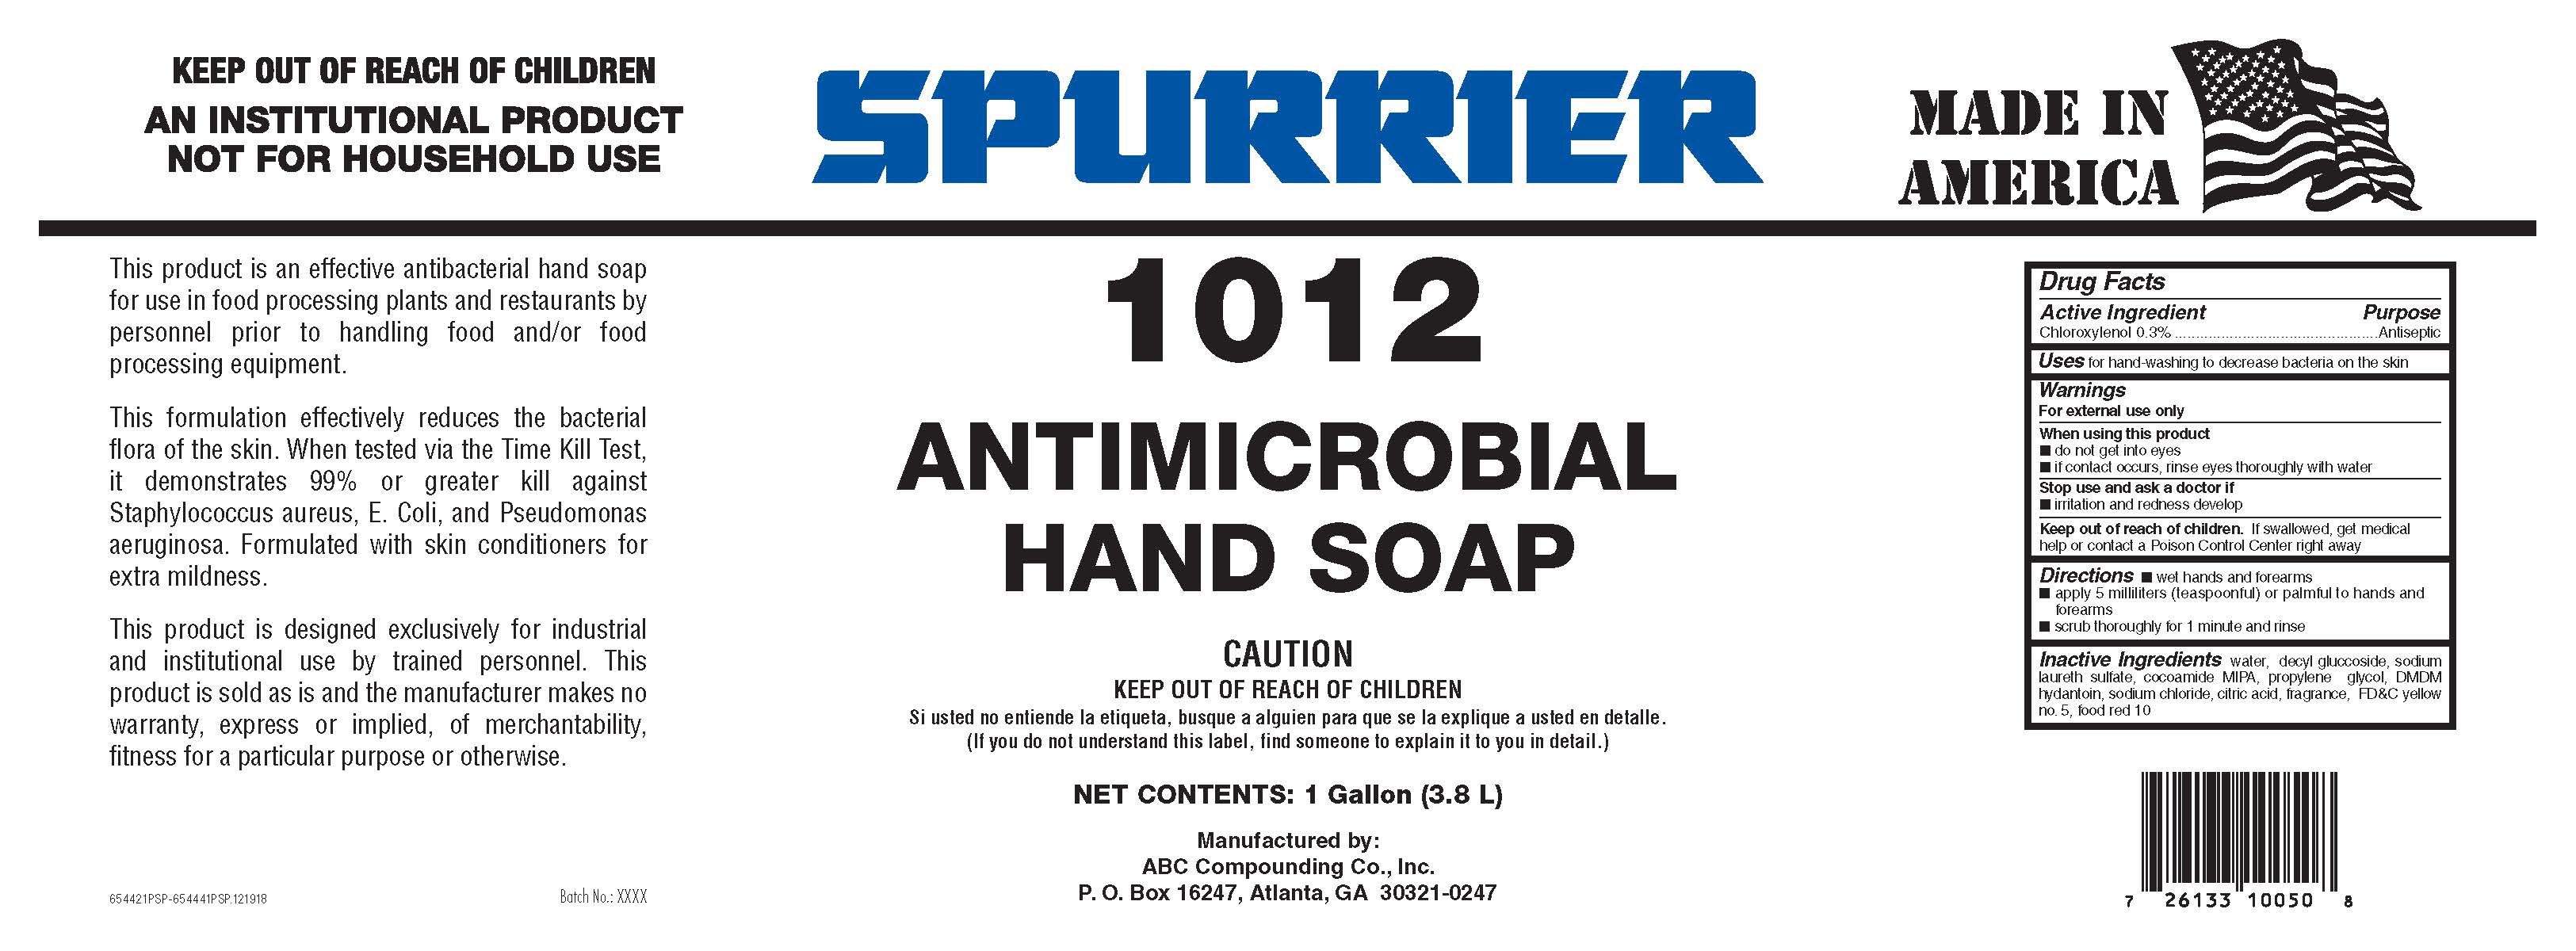 1012 Antimicrobial (Chloroxylenol) Soap [Abc Compounding Co., Inc.]